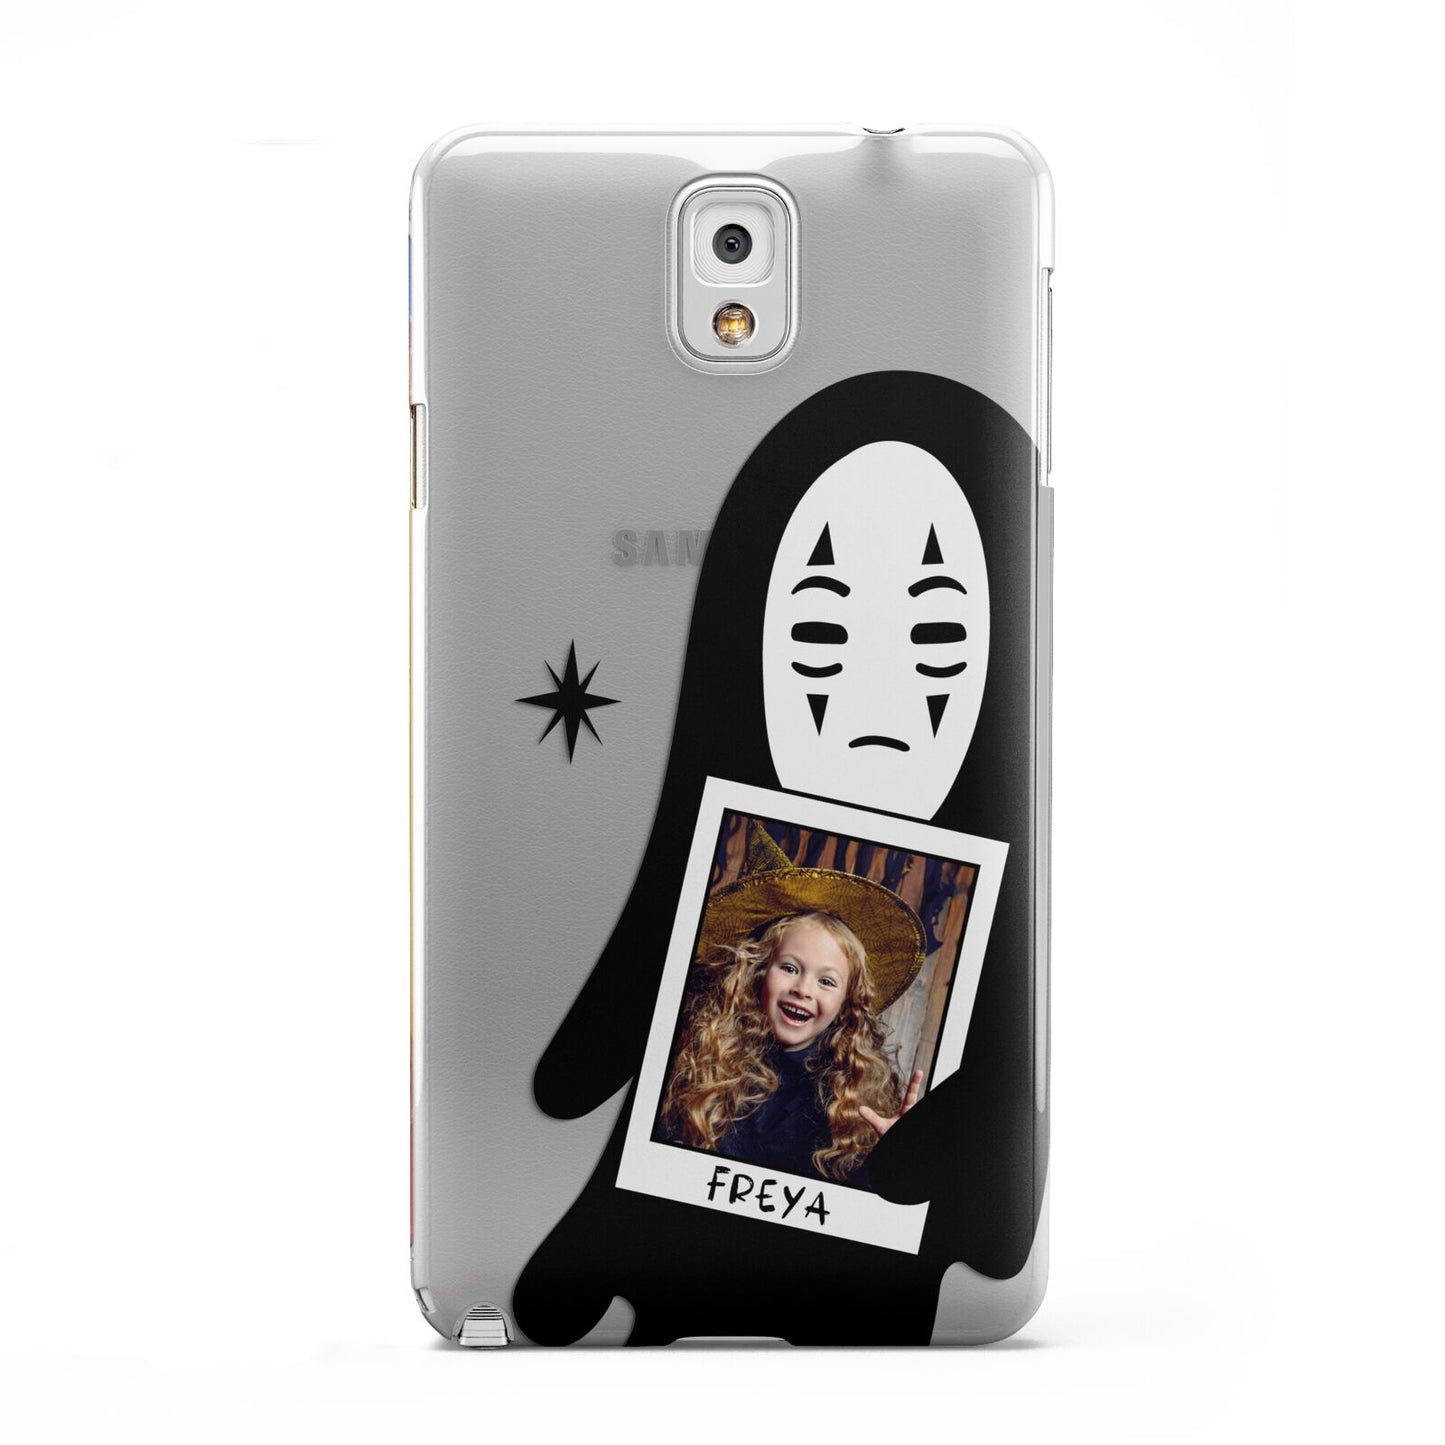 Ghostly Halloween Photo Samsung Galaxy Note 3 Case